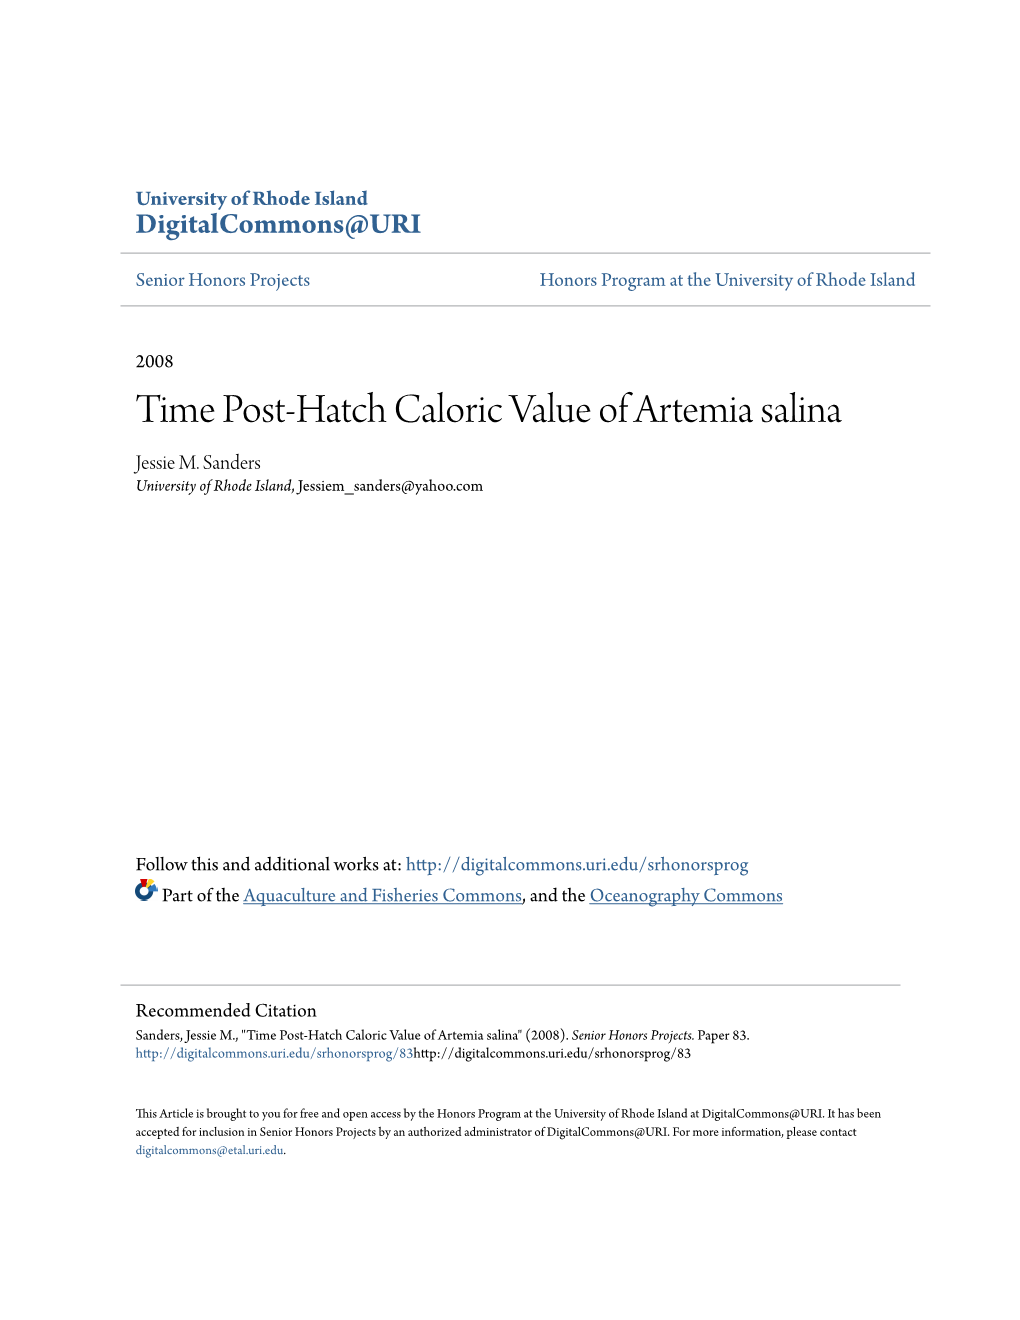 Time Post-Hatch Caloric Value of Artemia Salina Jessie M